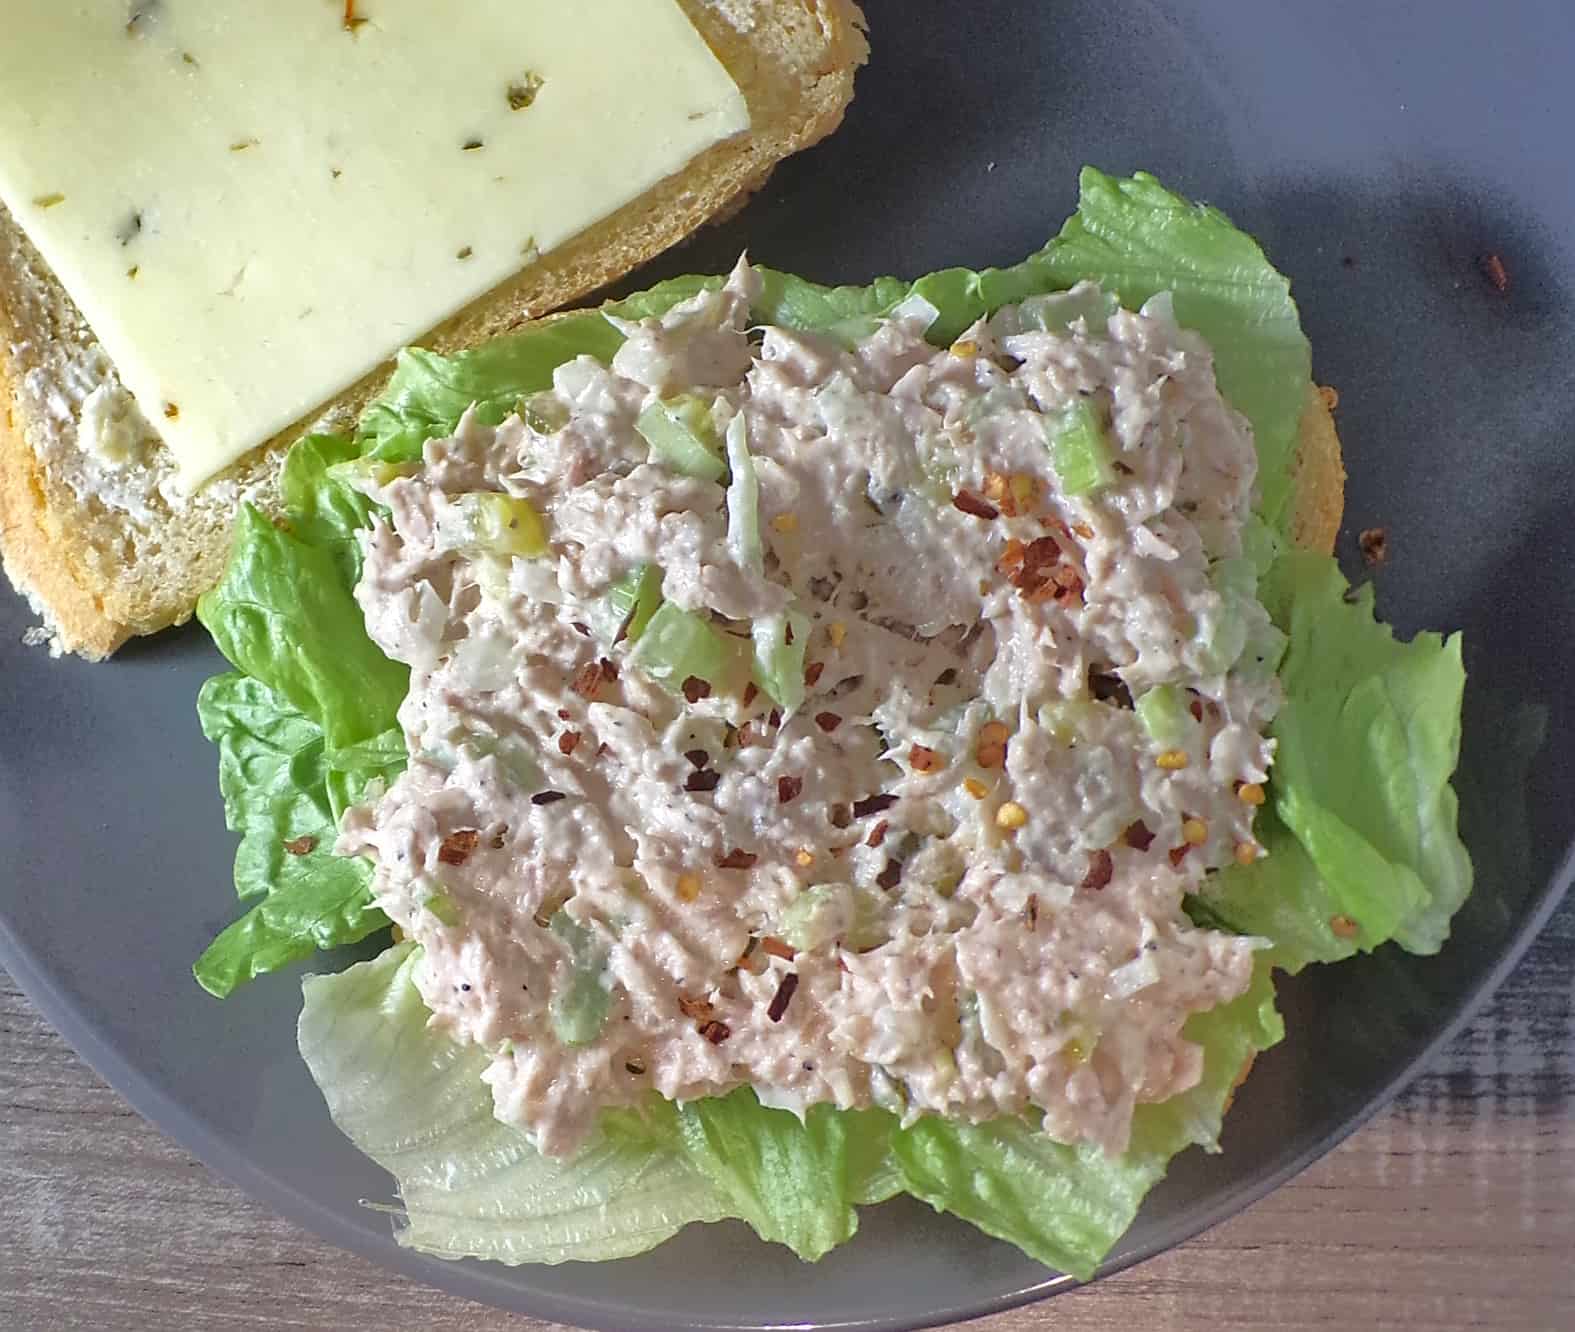 Tuna fish salad on my low sodium white bread